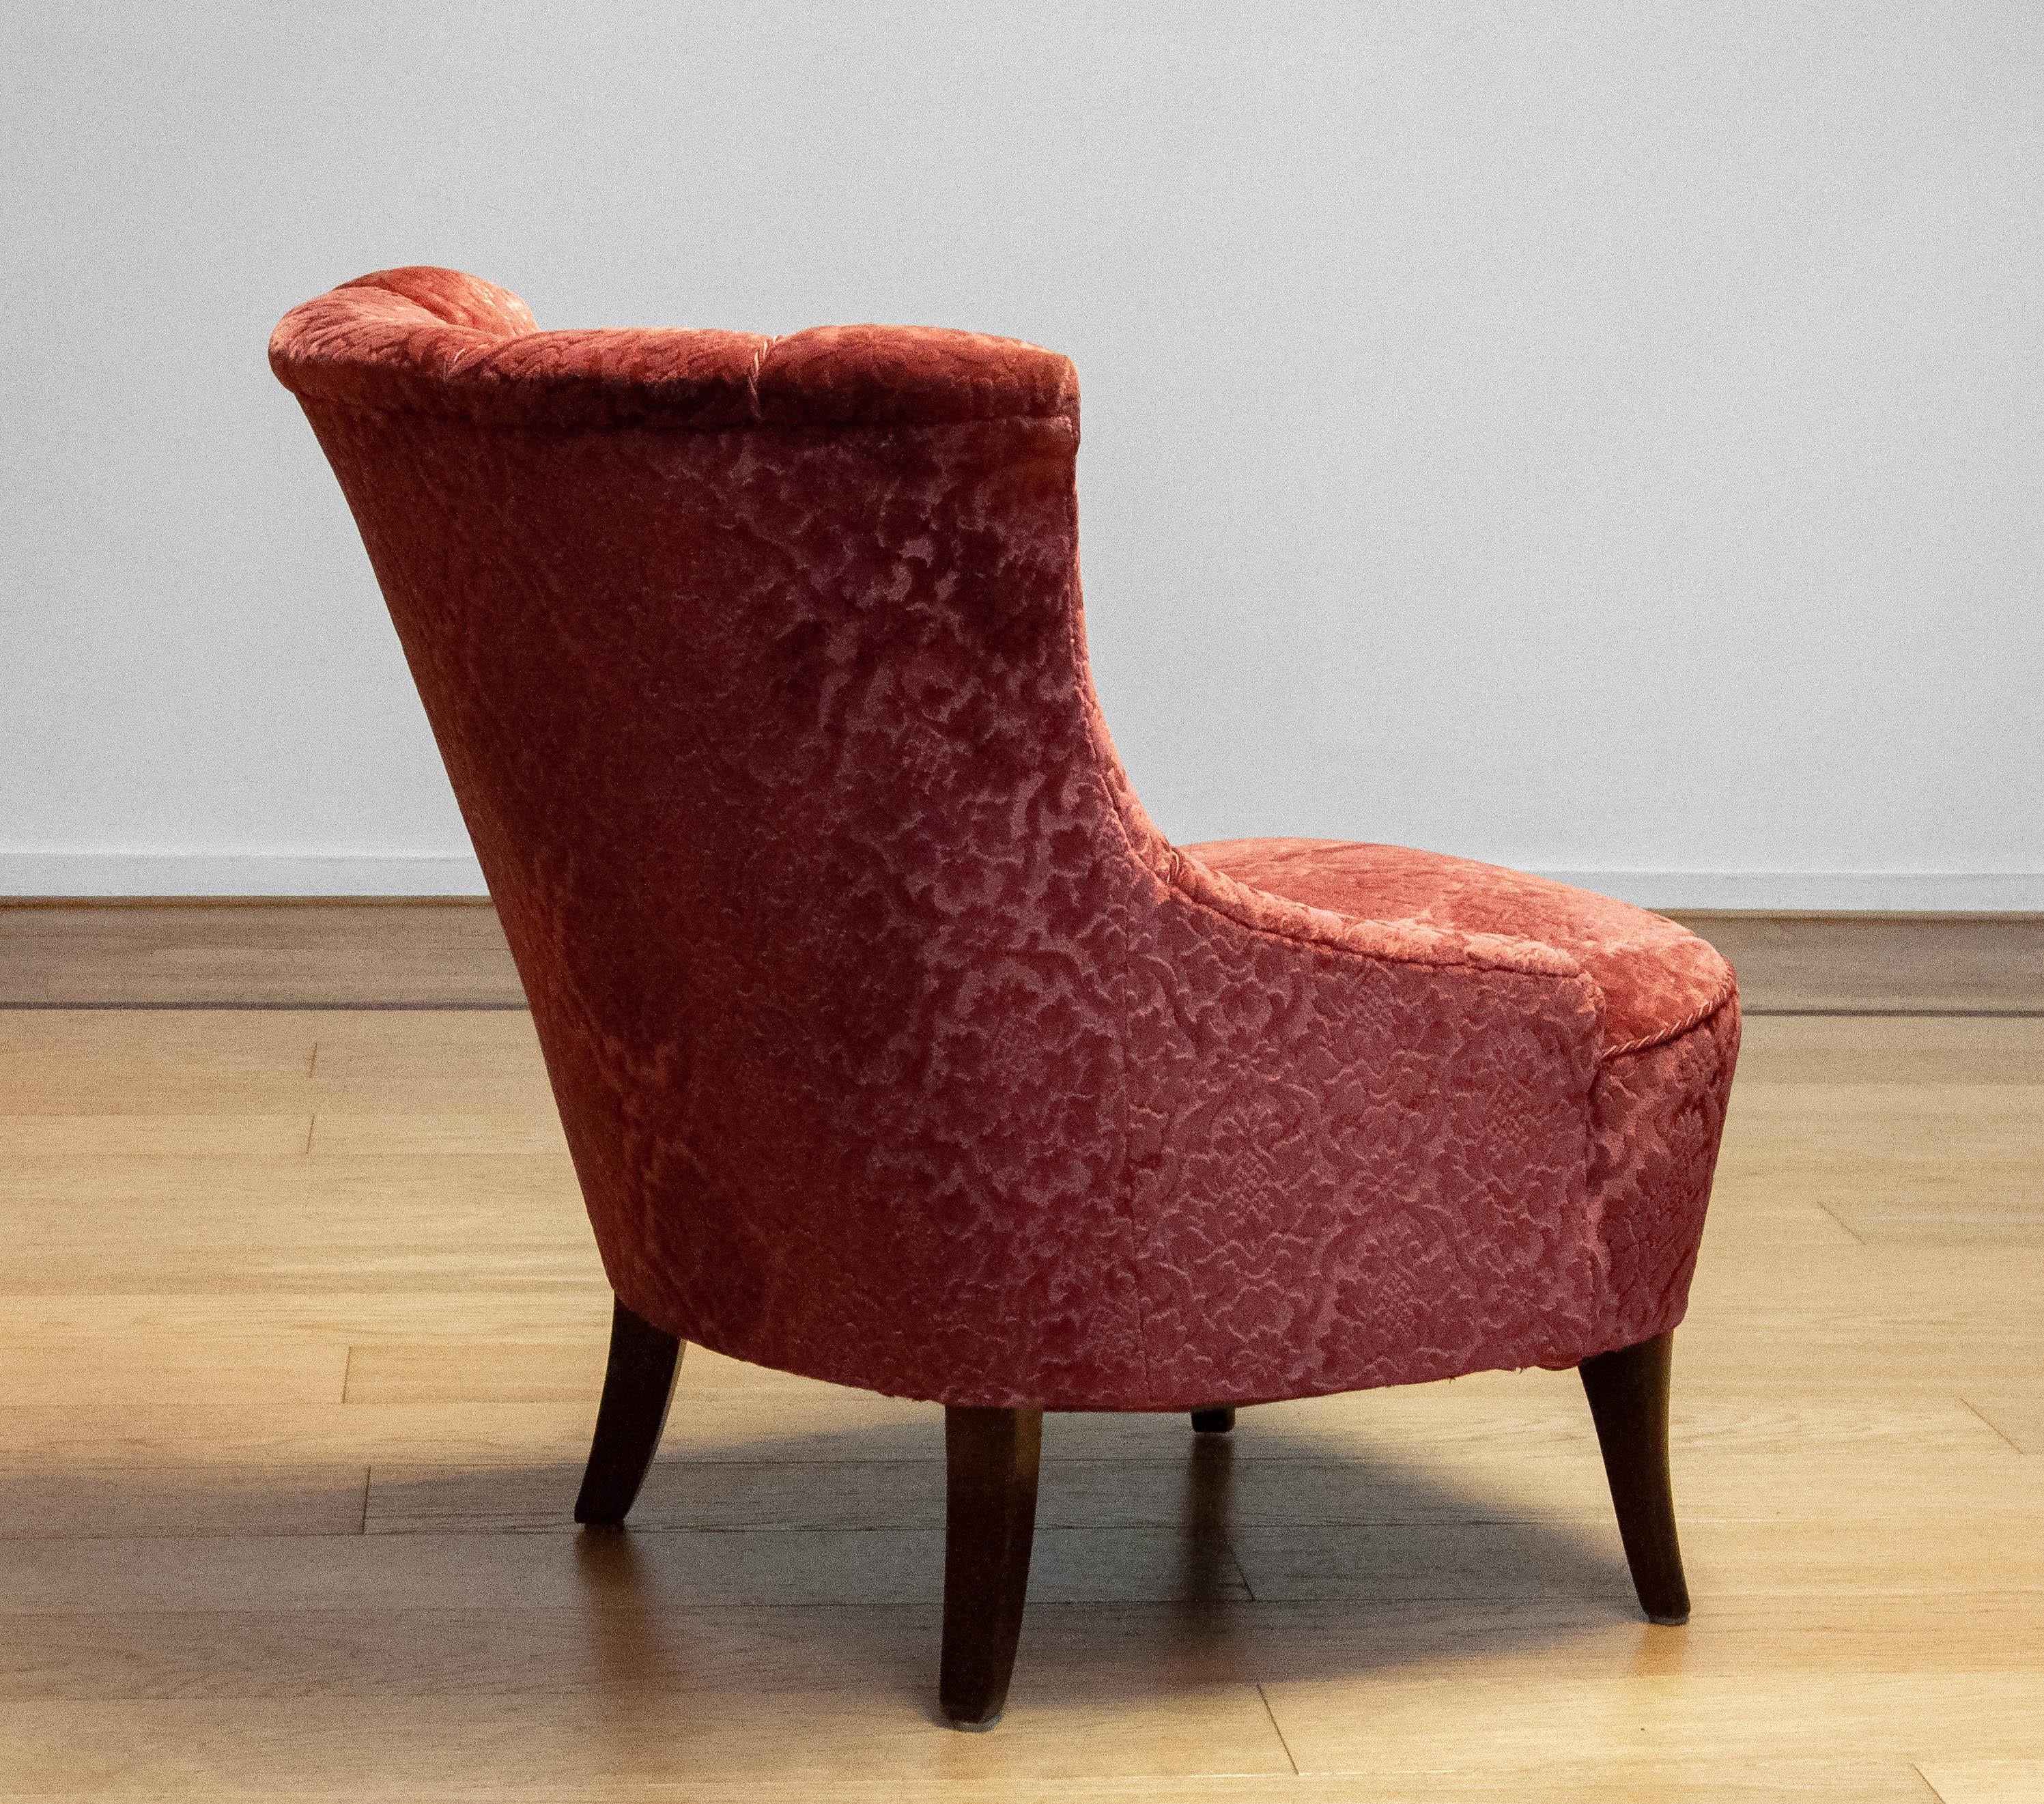 Norwegian 20th Century Napoleon III Slipper Chair In Brique Ton Sur Ton Jacquard Velvet For Sale